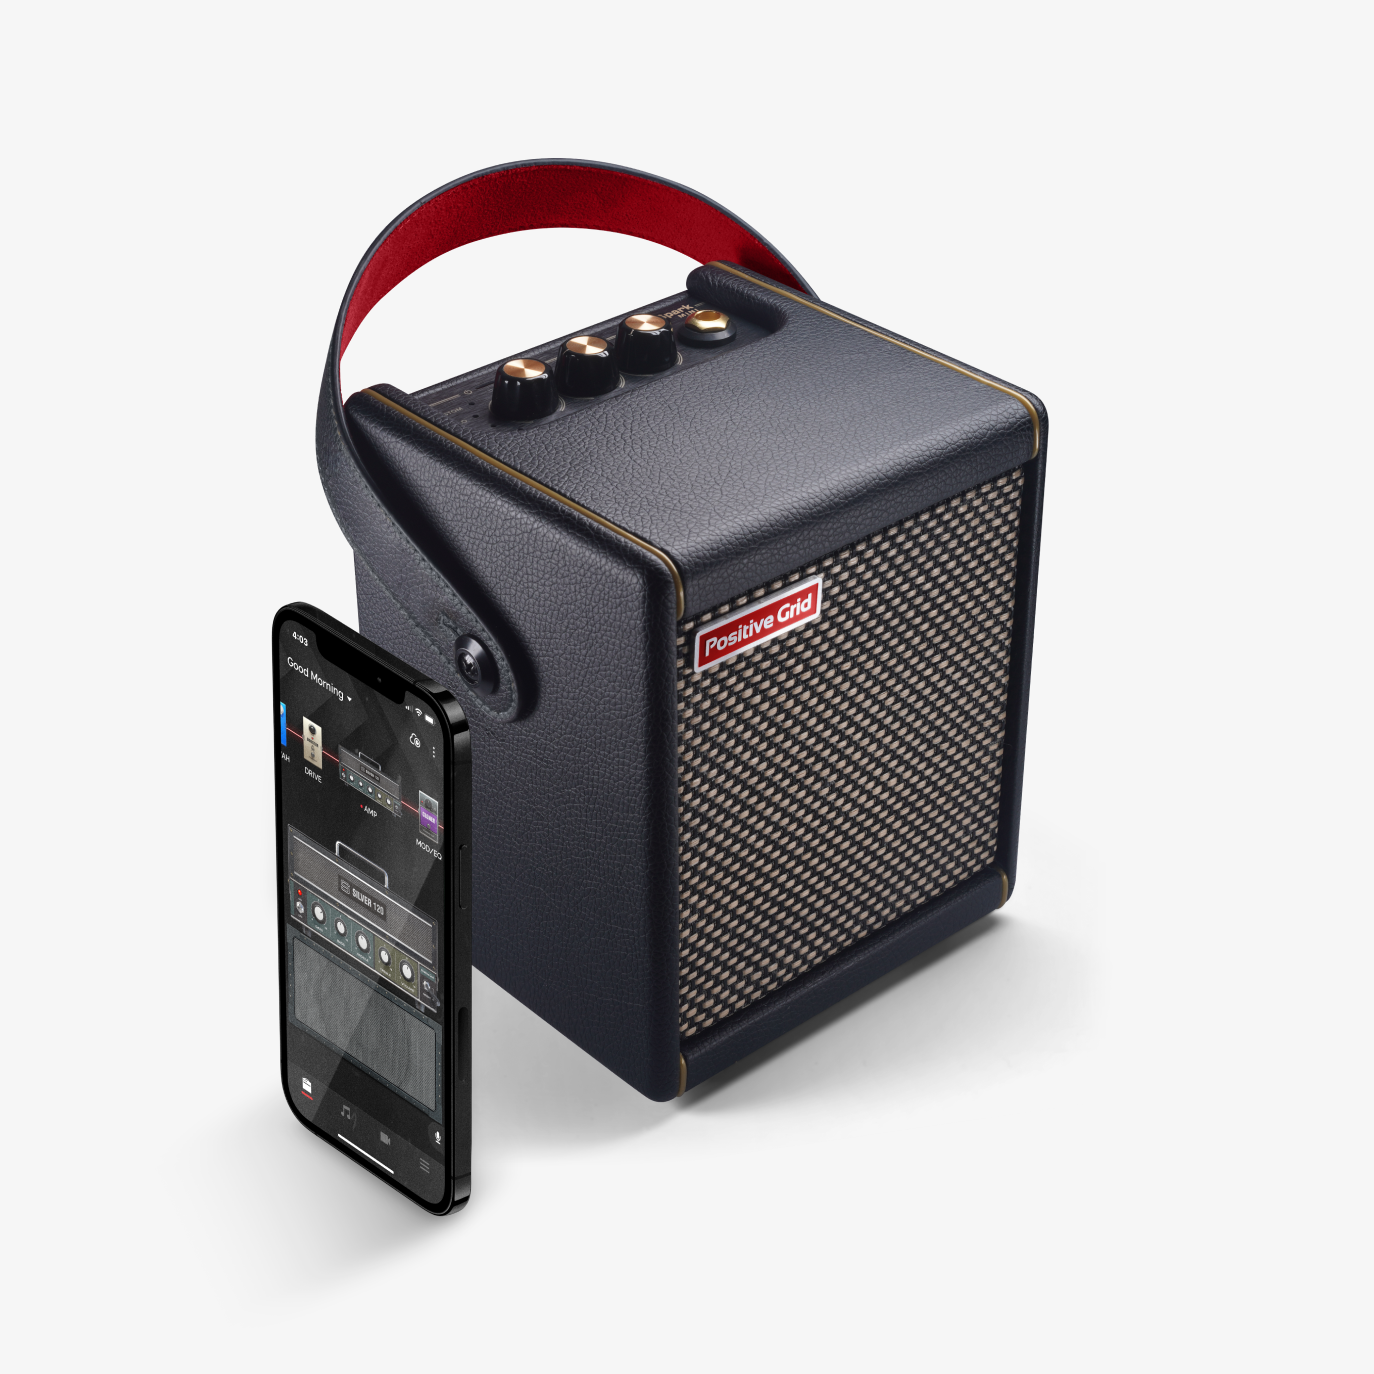 Spark GO Portable Smart Guitar Amp & Bluetooth Speaker - Positive